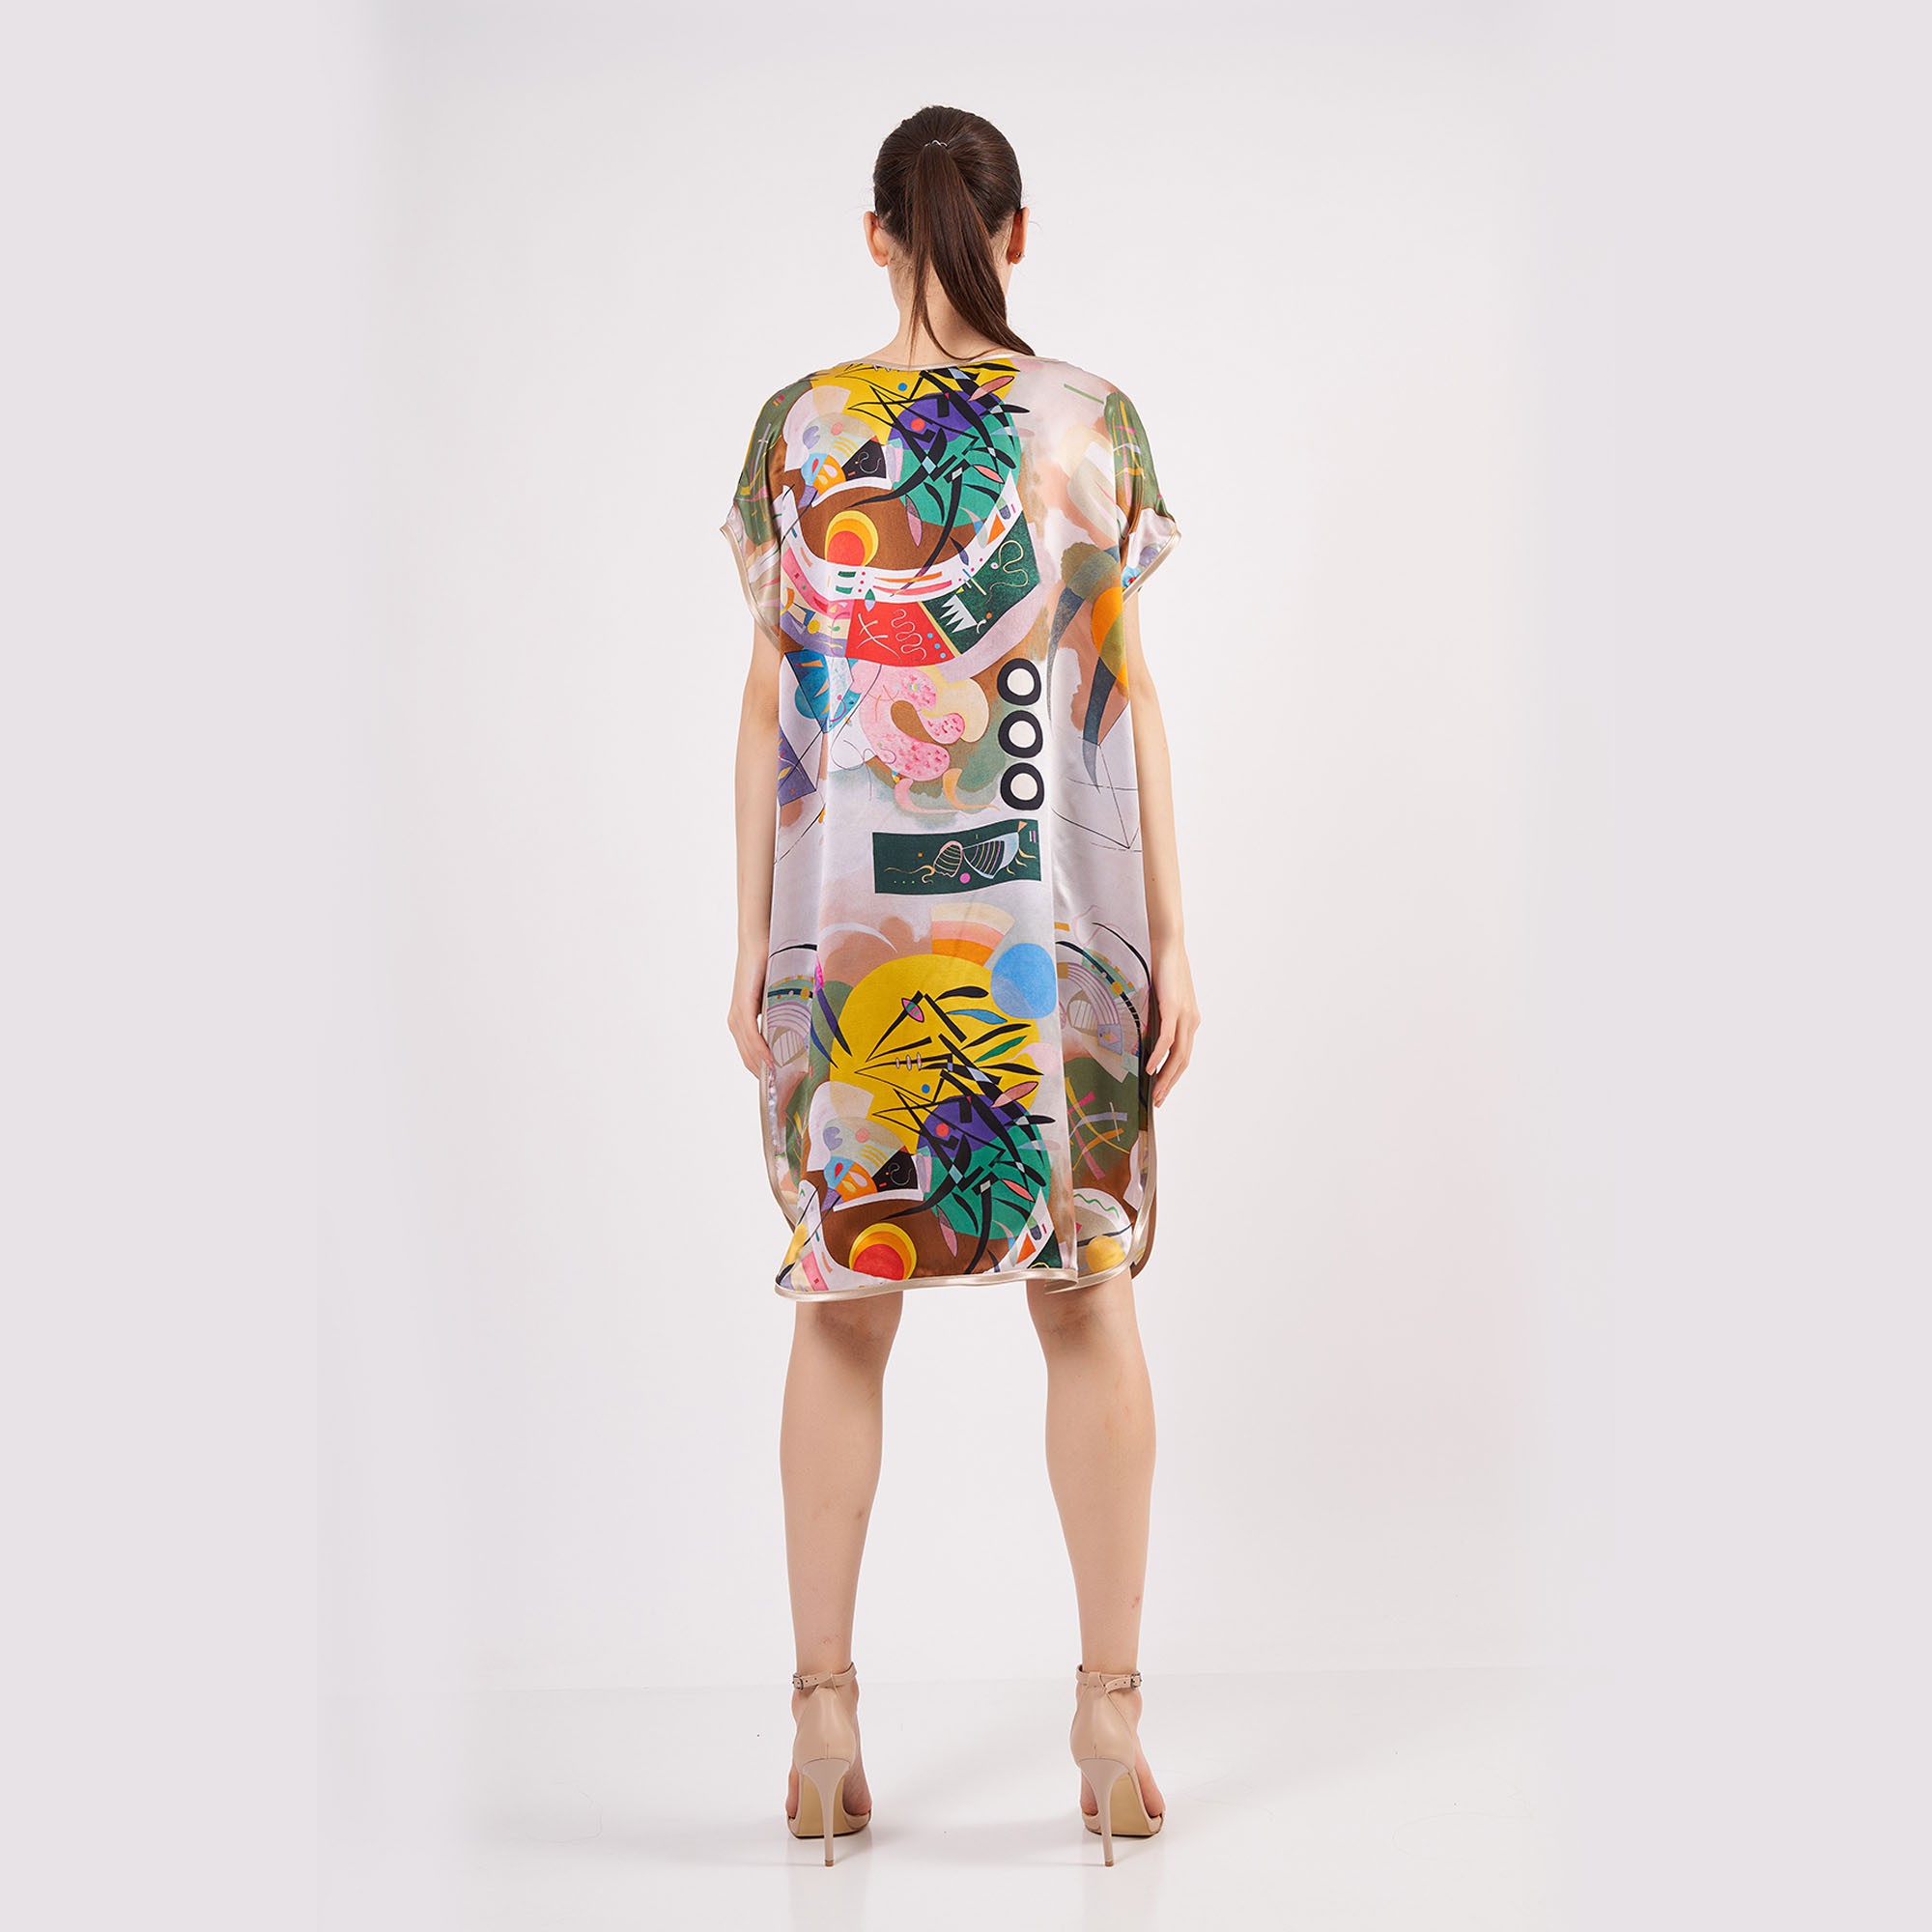 Silk Plus Size Short Dress For Women | Oversized Short Kaftan Kandinsky Dominant Curve | Loose Fitting Dress